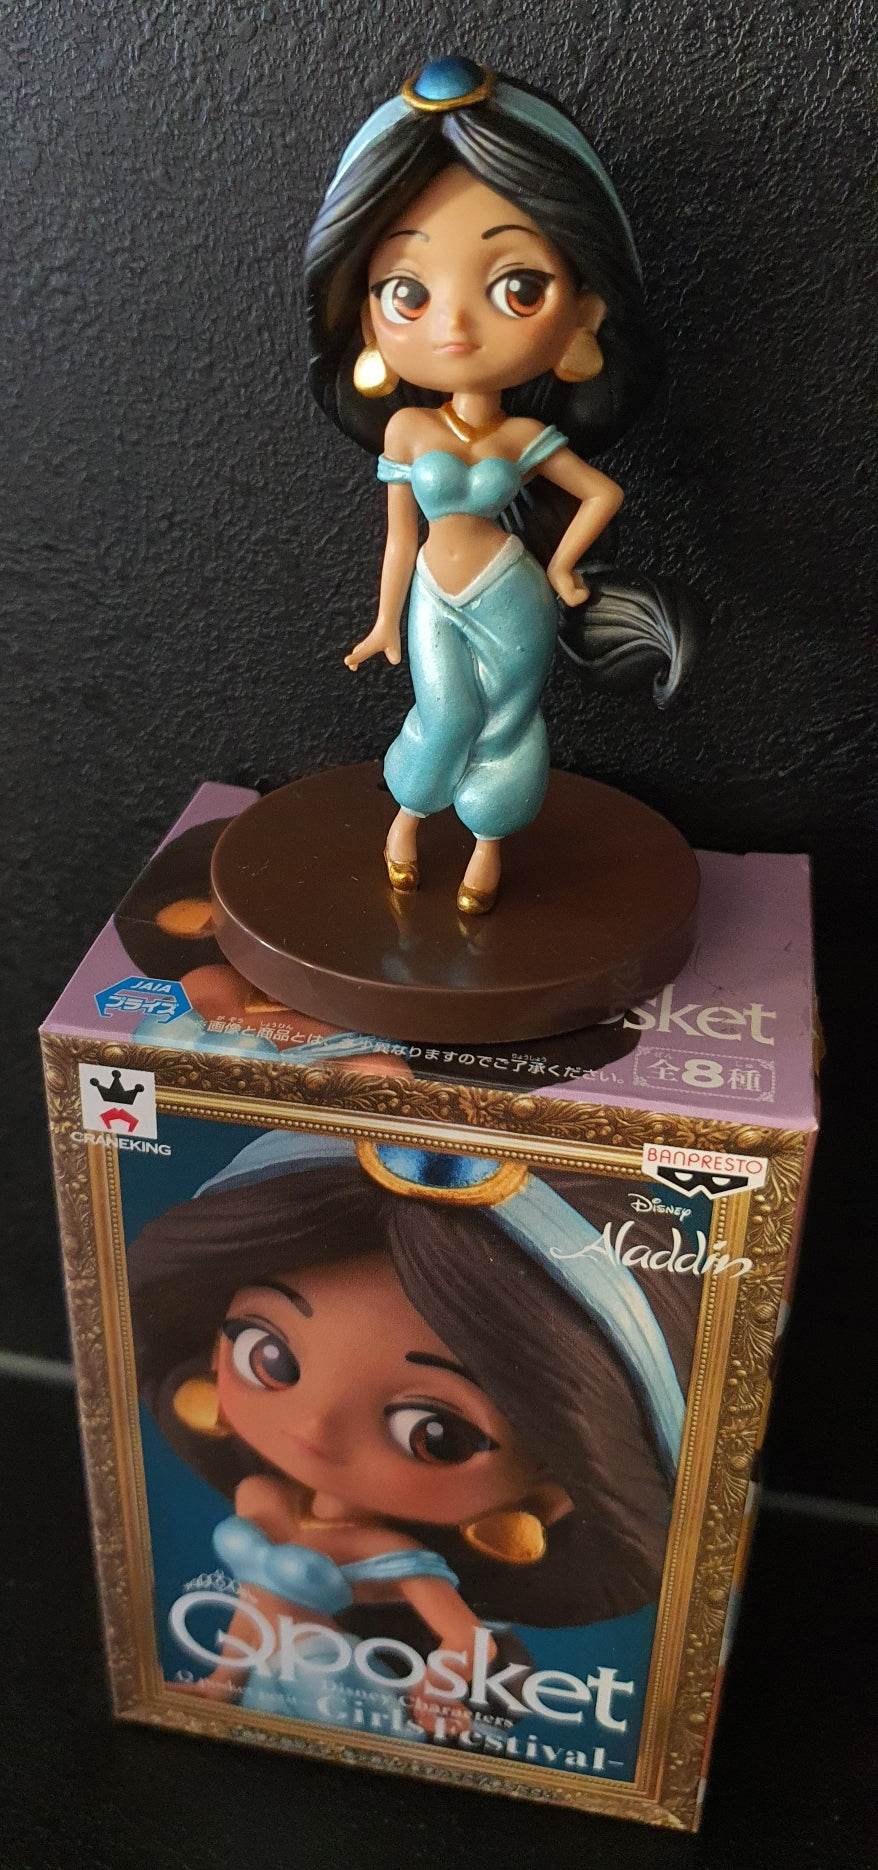 Figurine Mini Q-Posket - Jasmine